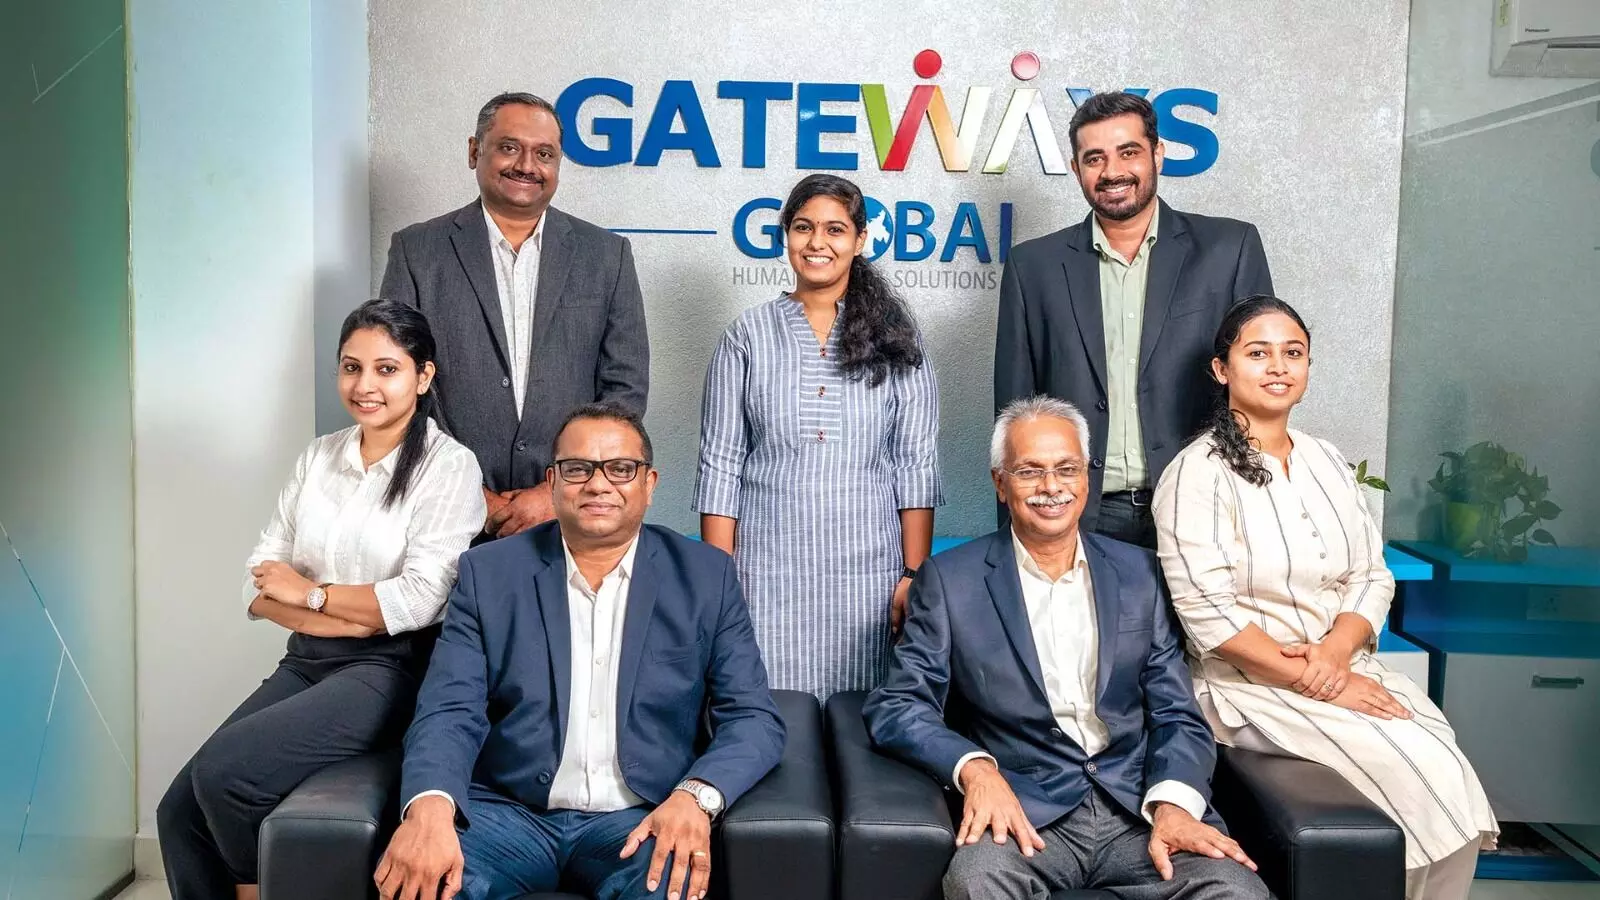 Photo of Gateways Global team